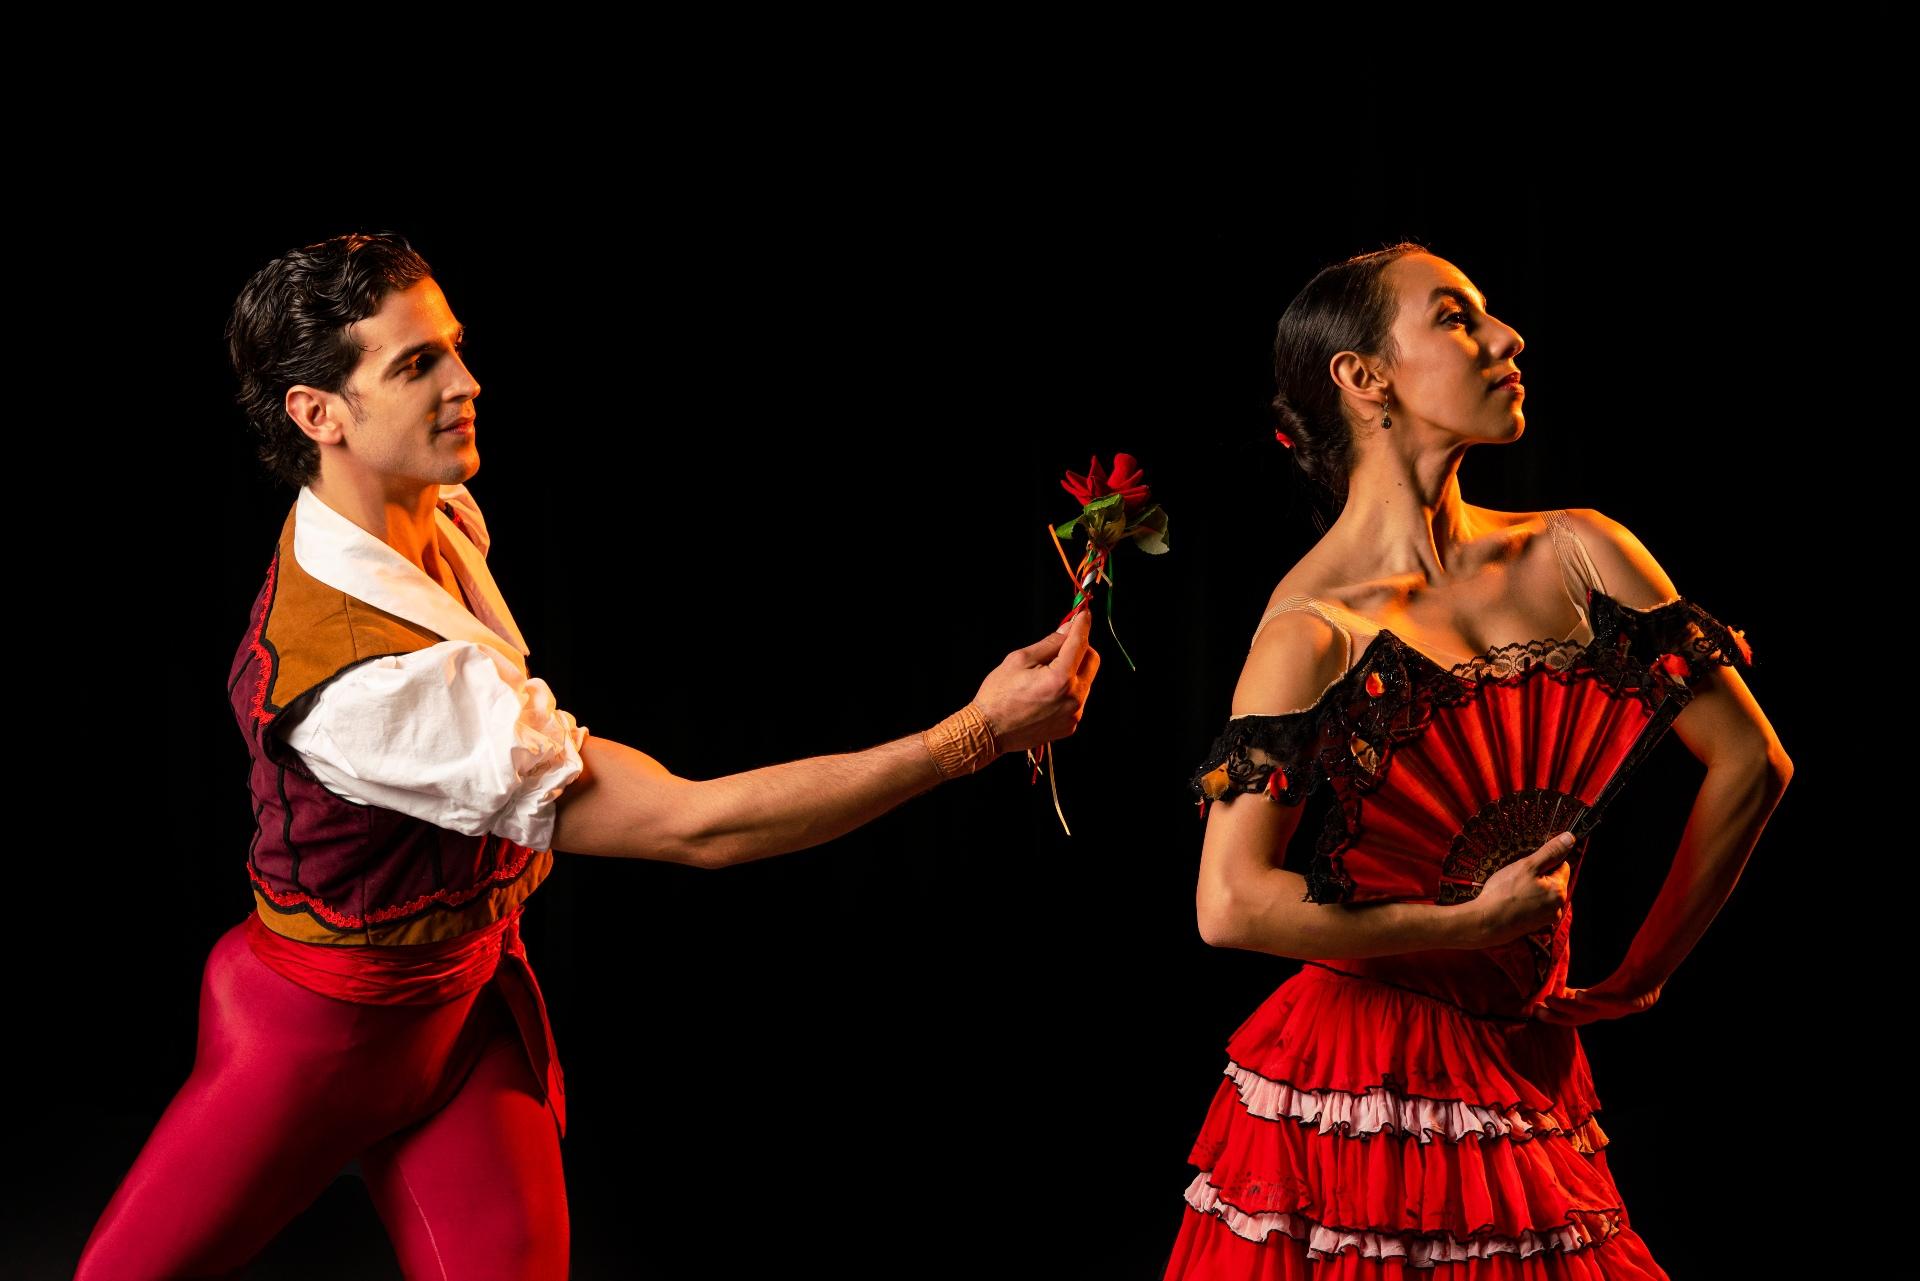 Alberto Velazquez and Amanda Assucena in “Don Quixote.” (Photo by Todd Rosenberg)